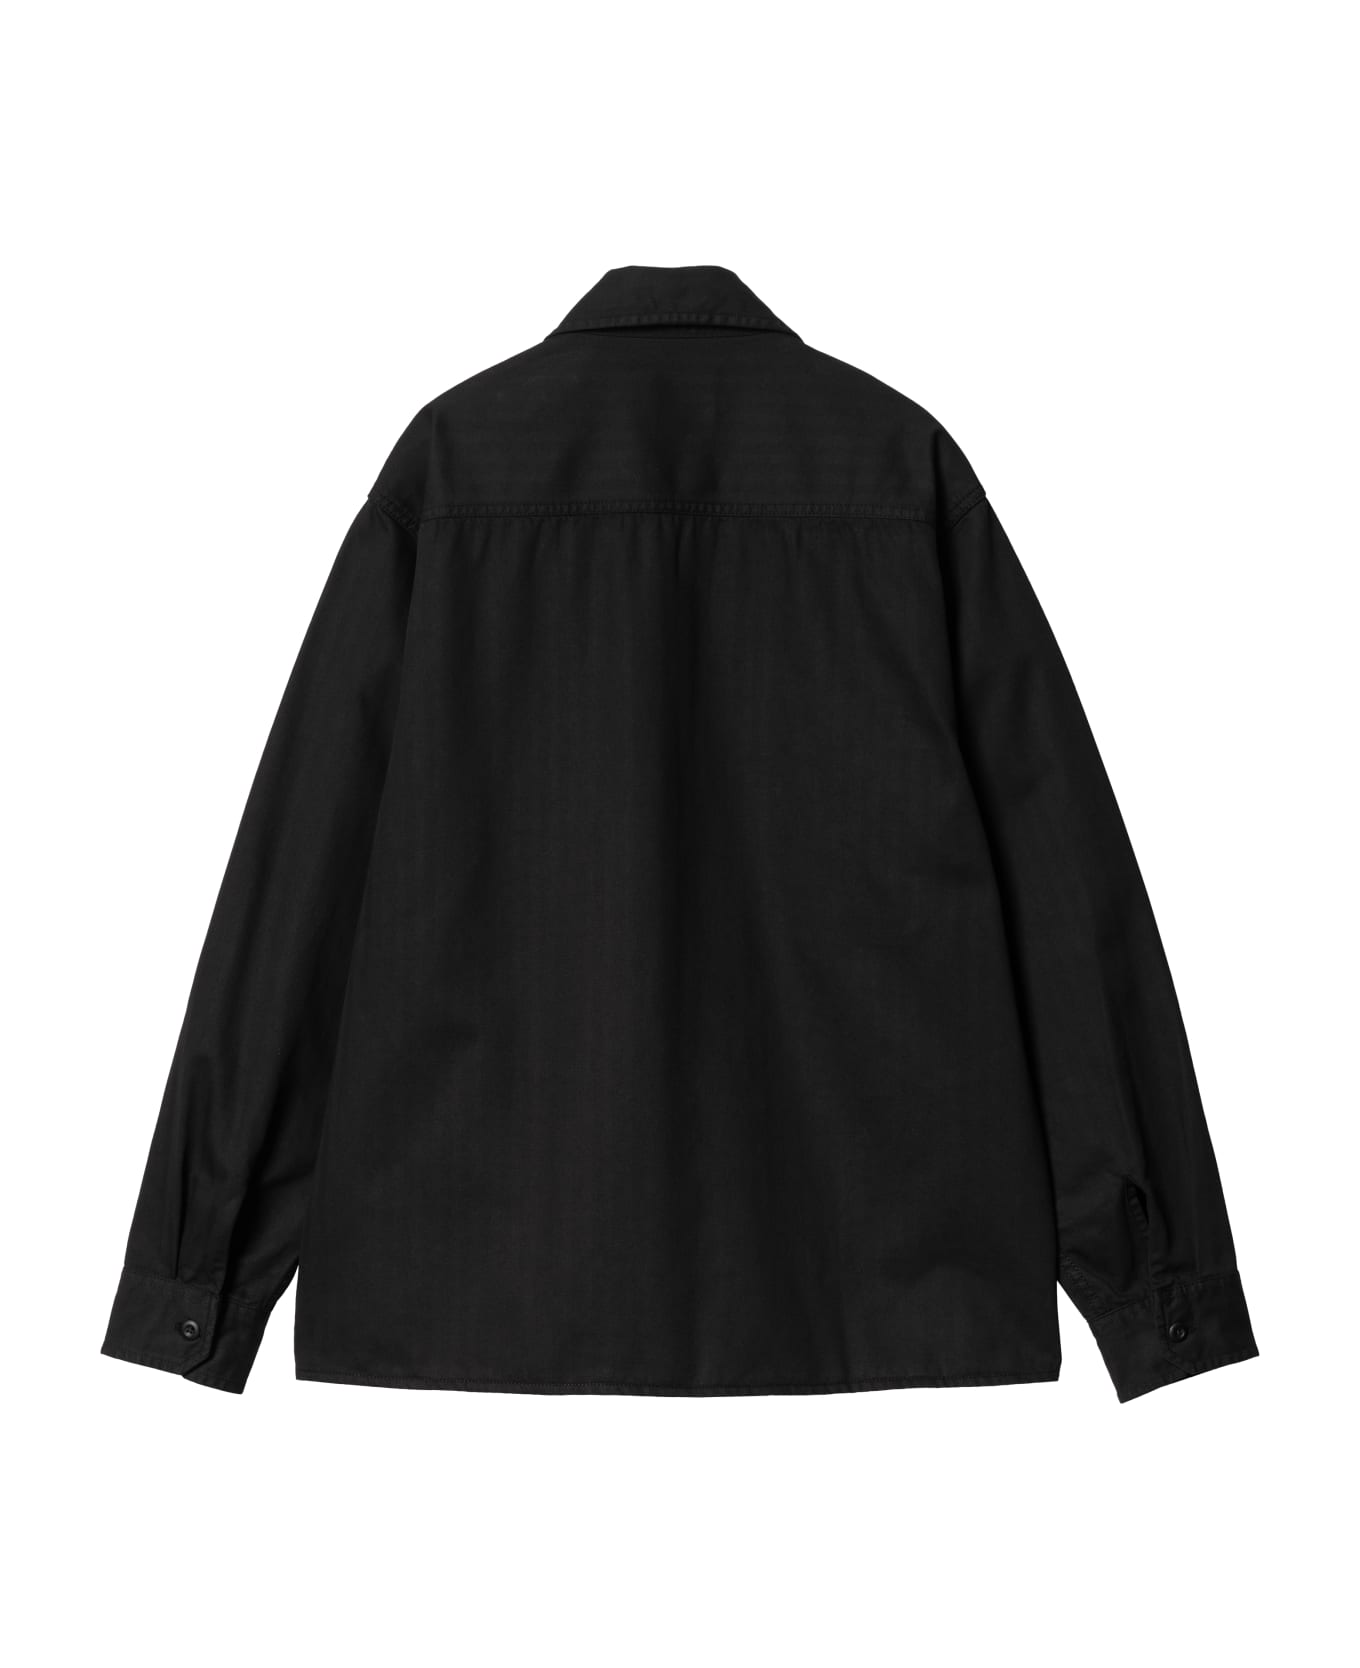 Carhartt Rainer Shirt Jac - Gd Black ジャケット